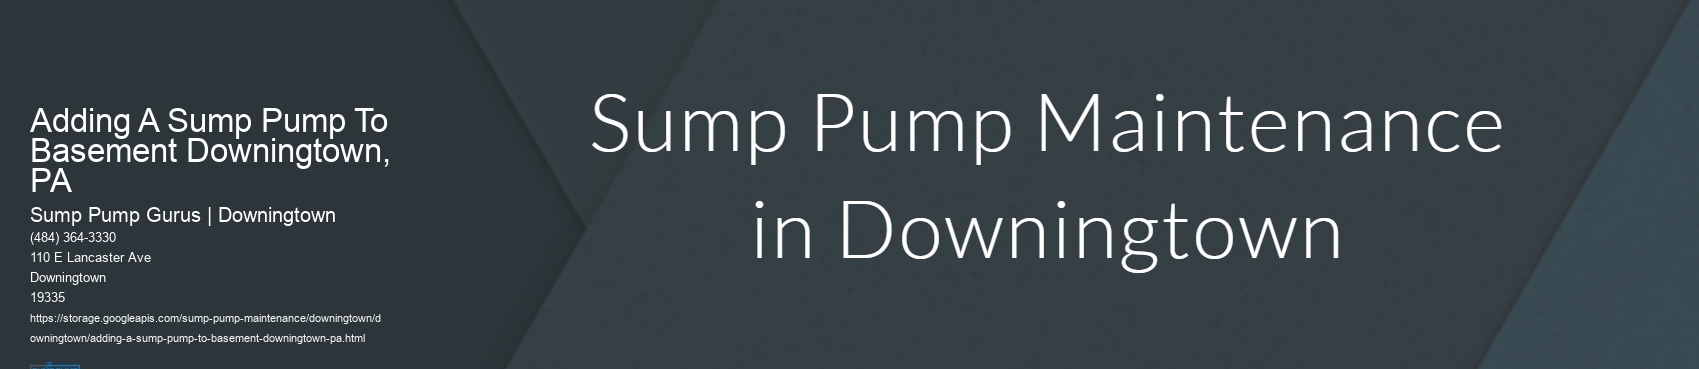 Adding A Sump Pump To Basement Downingtown, PA